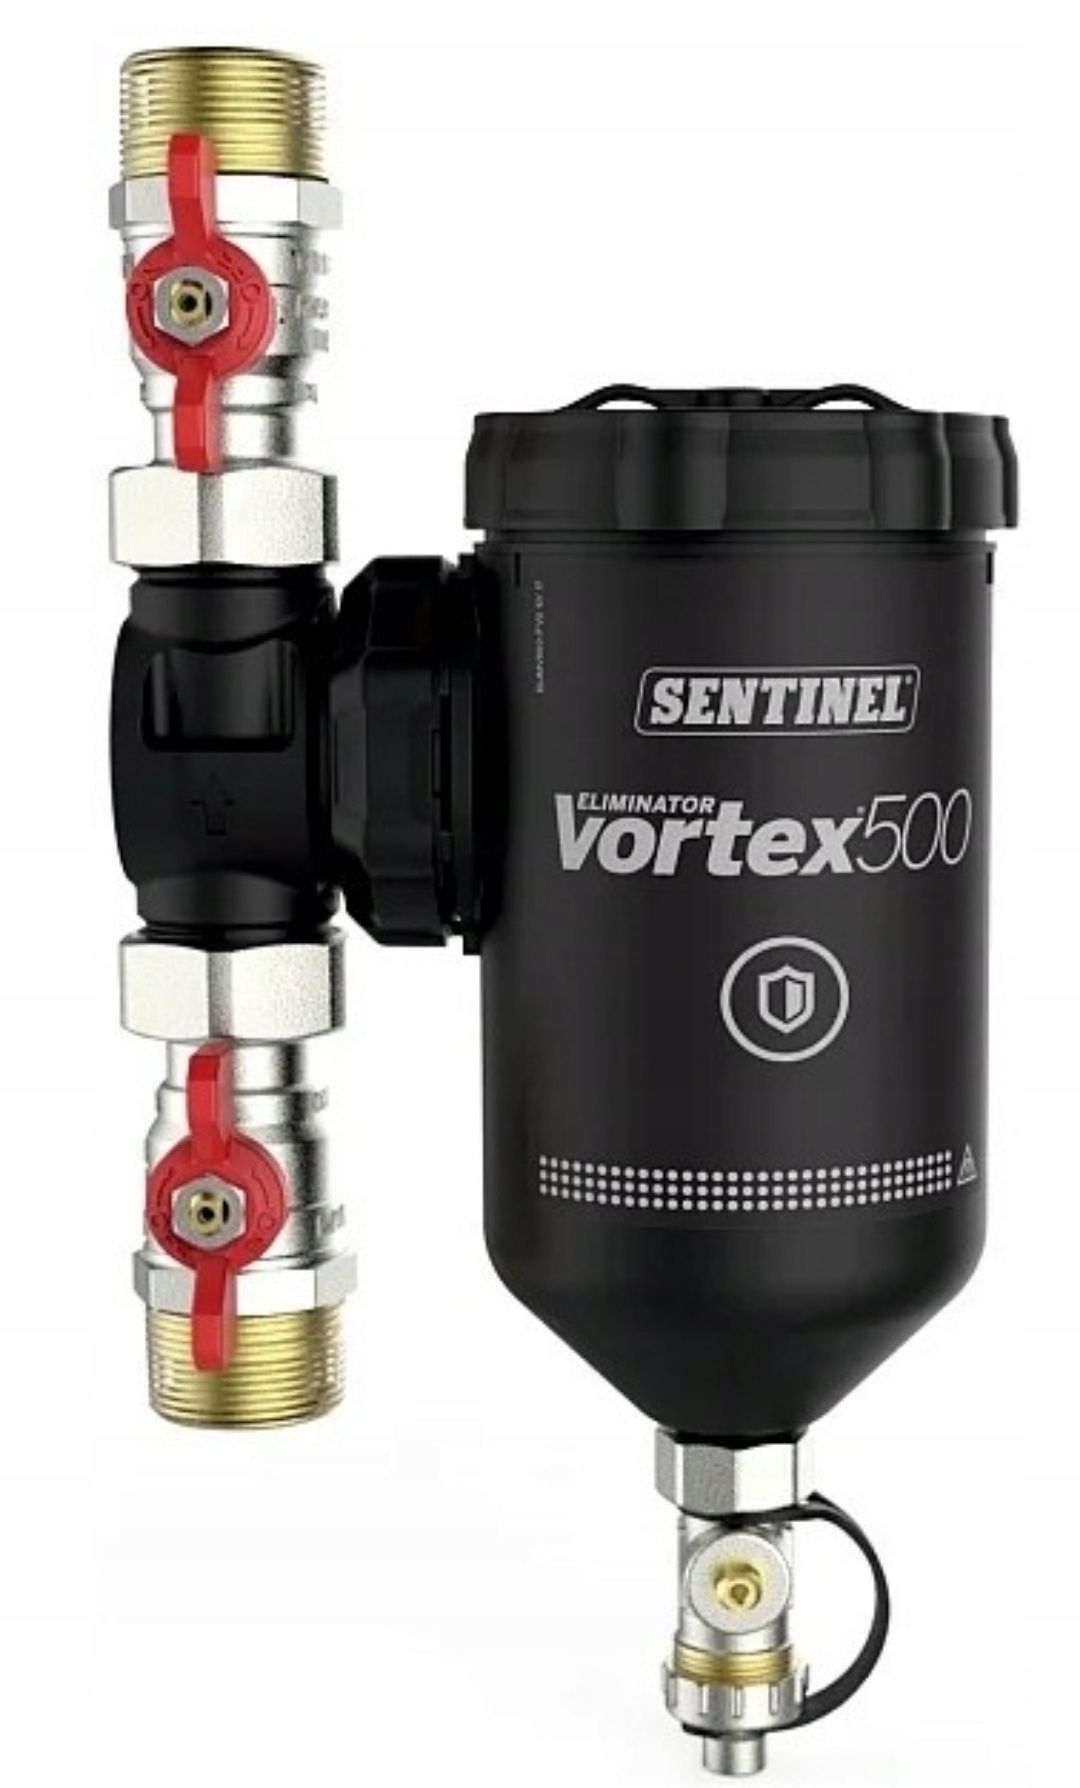 Filtr magnetyczny SENTINEL Vortex500 z zaworami 1" do C.O.